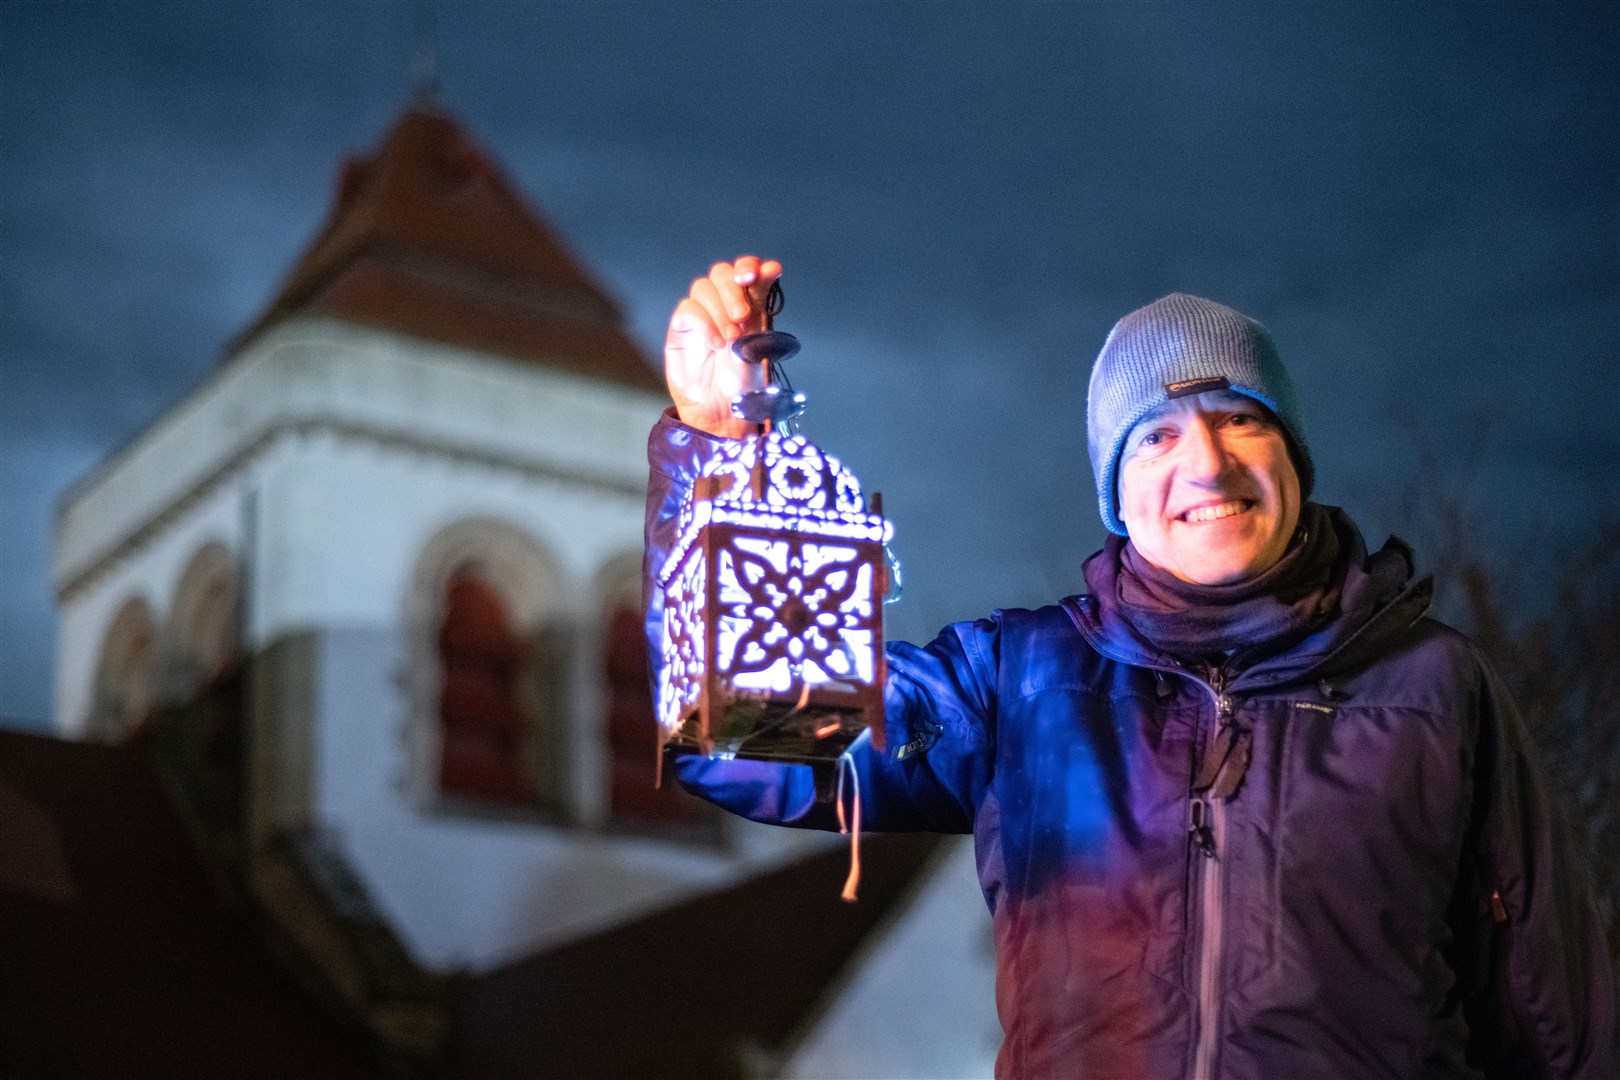 Rev Geoff McKee with his lantern. Picture: Daniel Forsyth